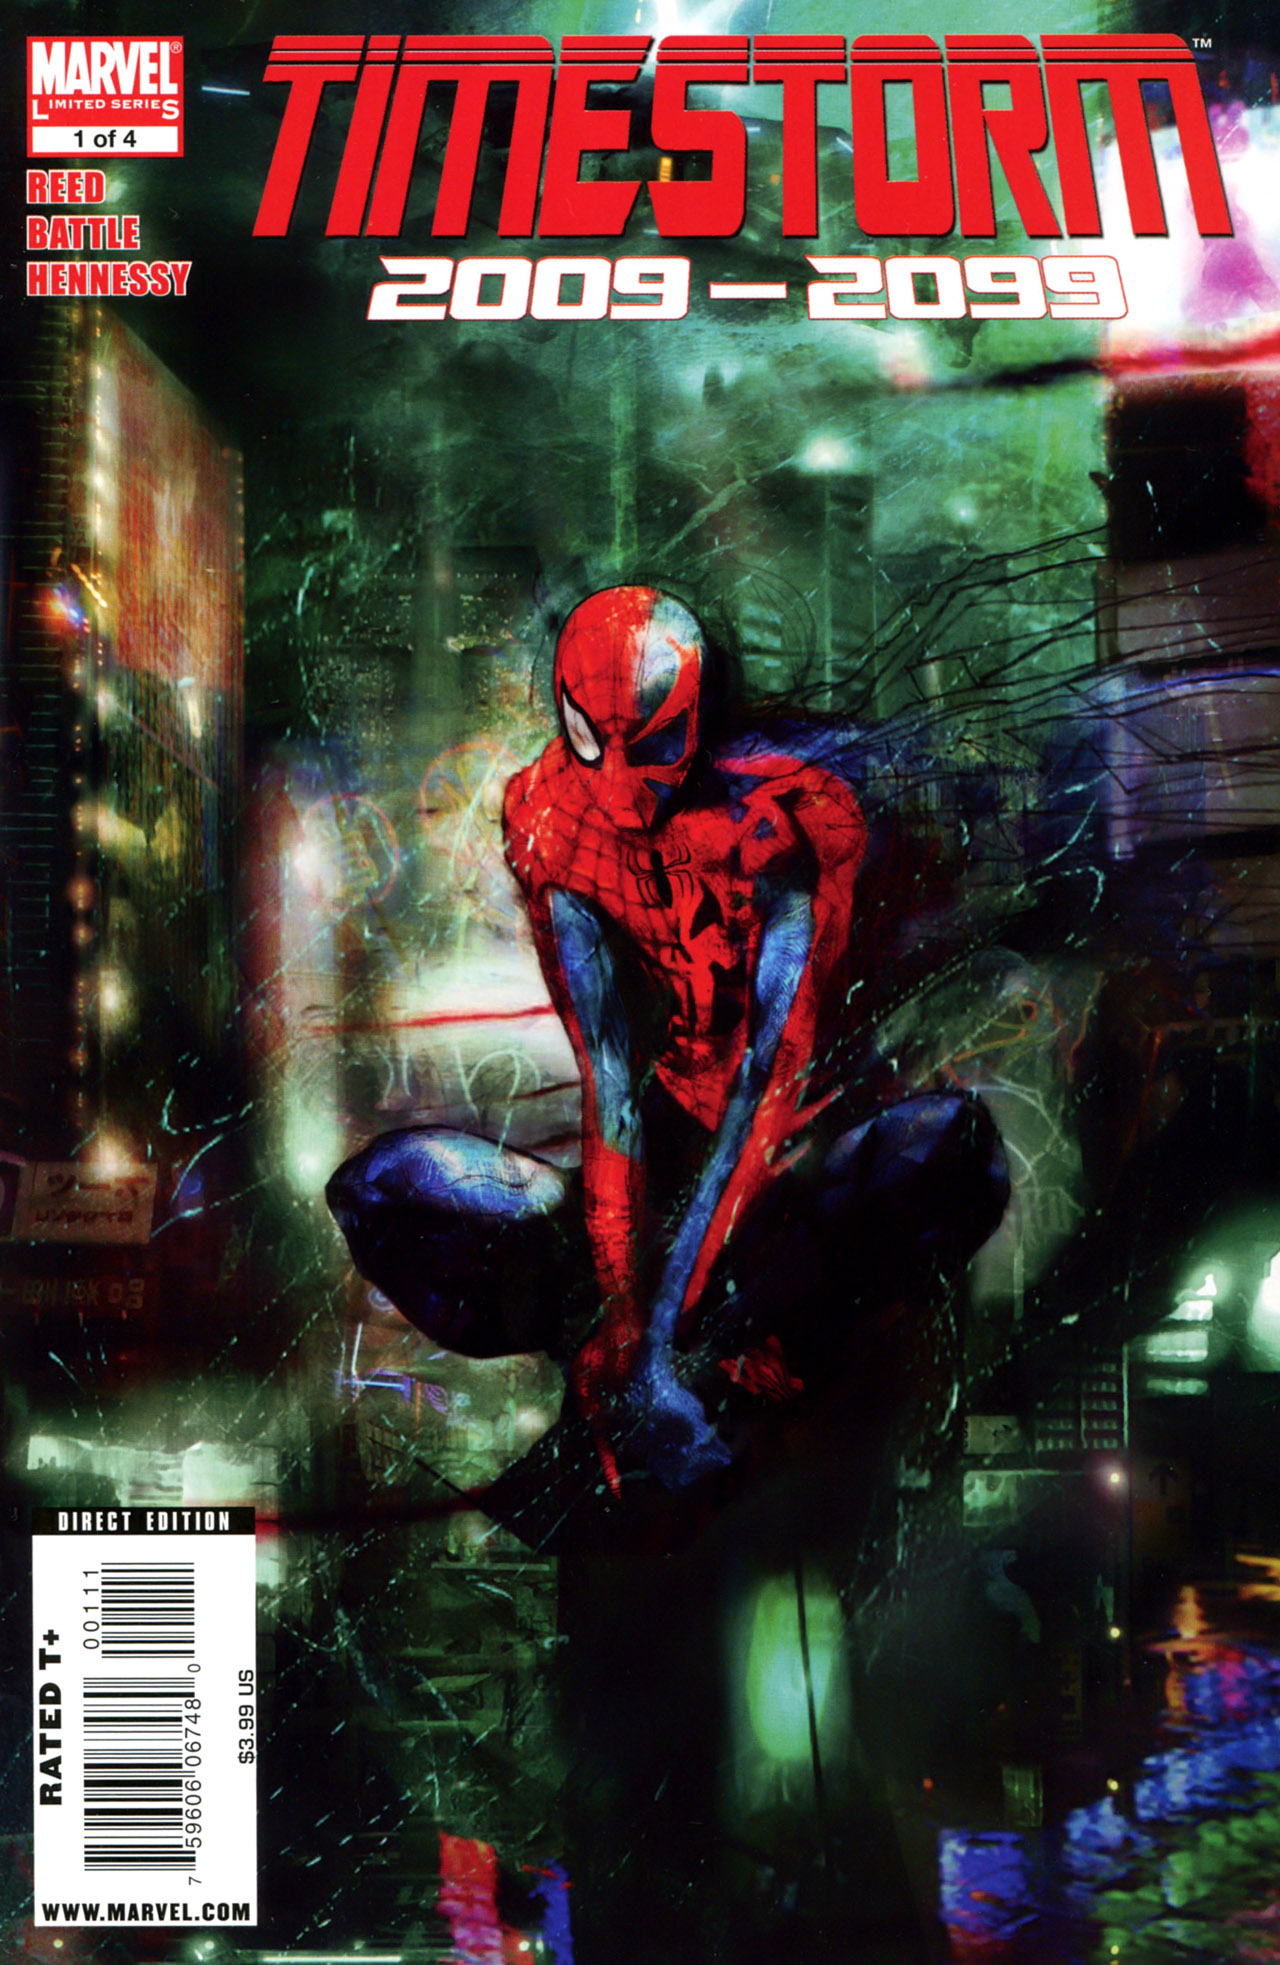 Read online Timestorm 2009/2099 comic -  Issue #1 - 1